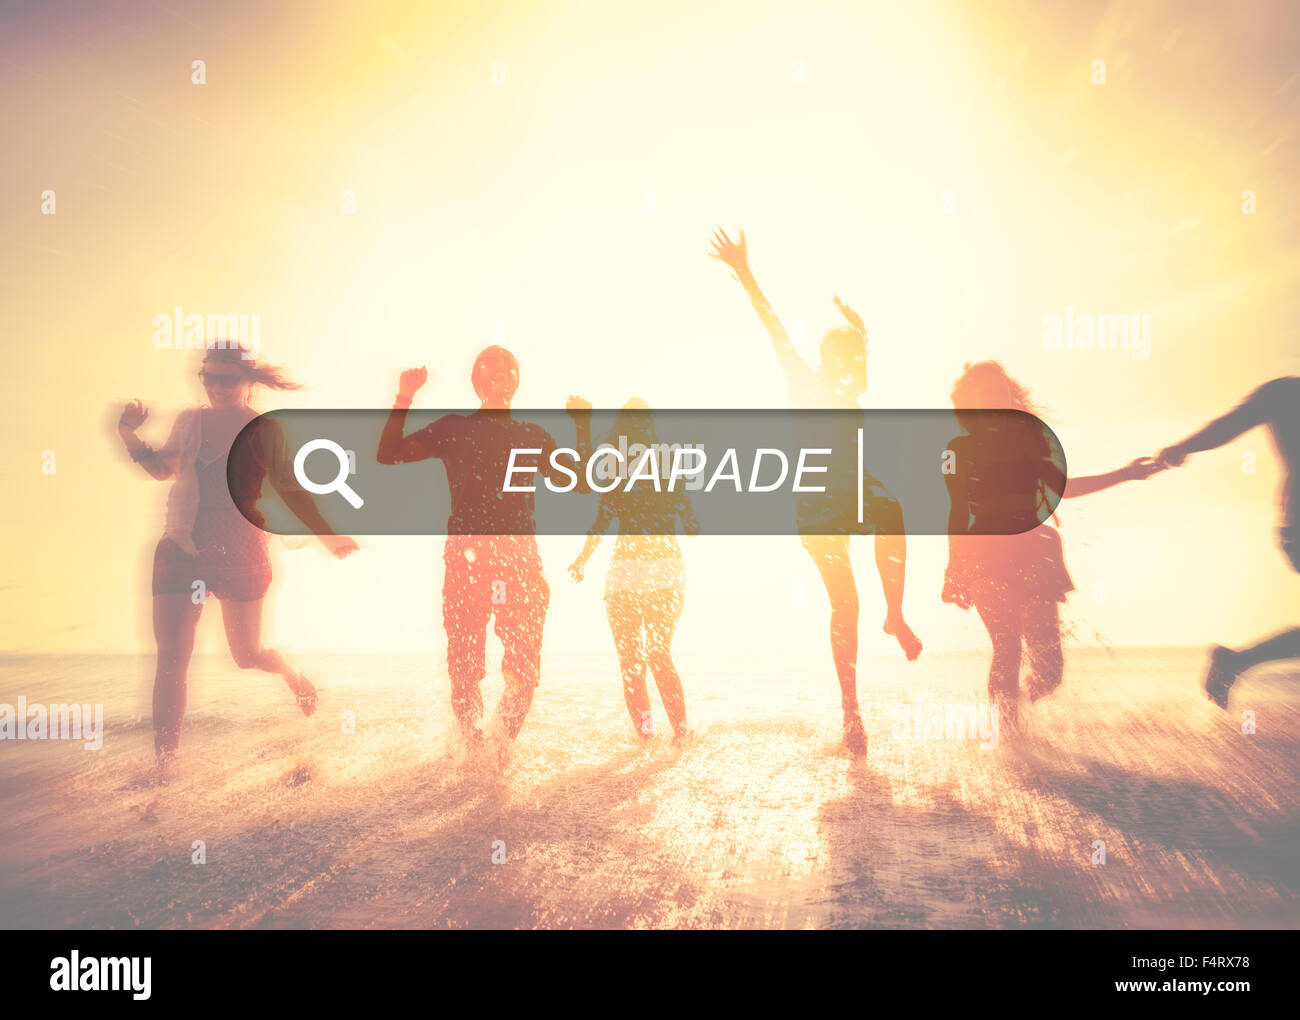 Escapade Journey Dream Freedom Travel Adventure Concept Stock Photo